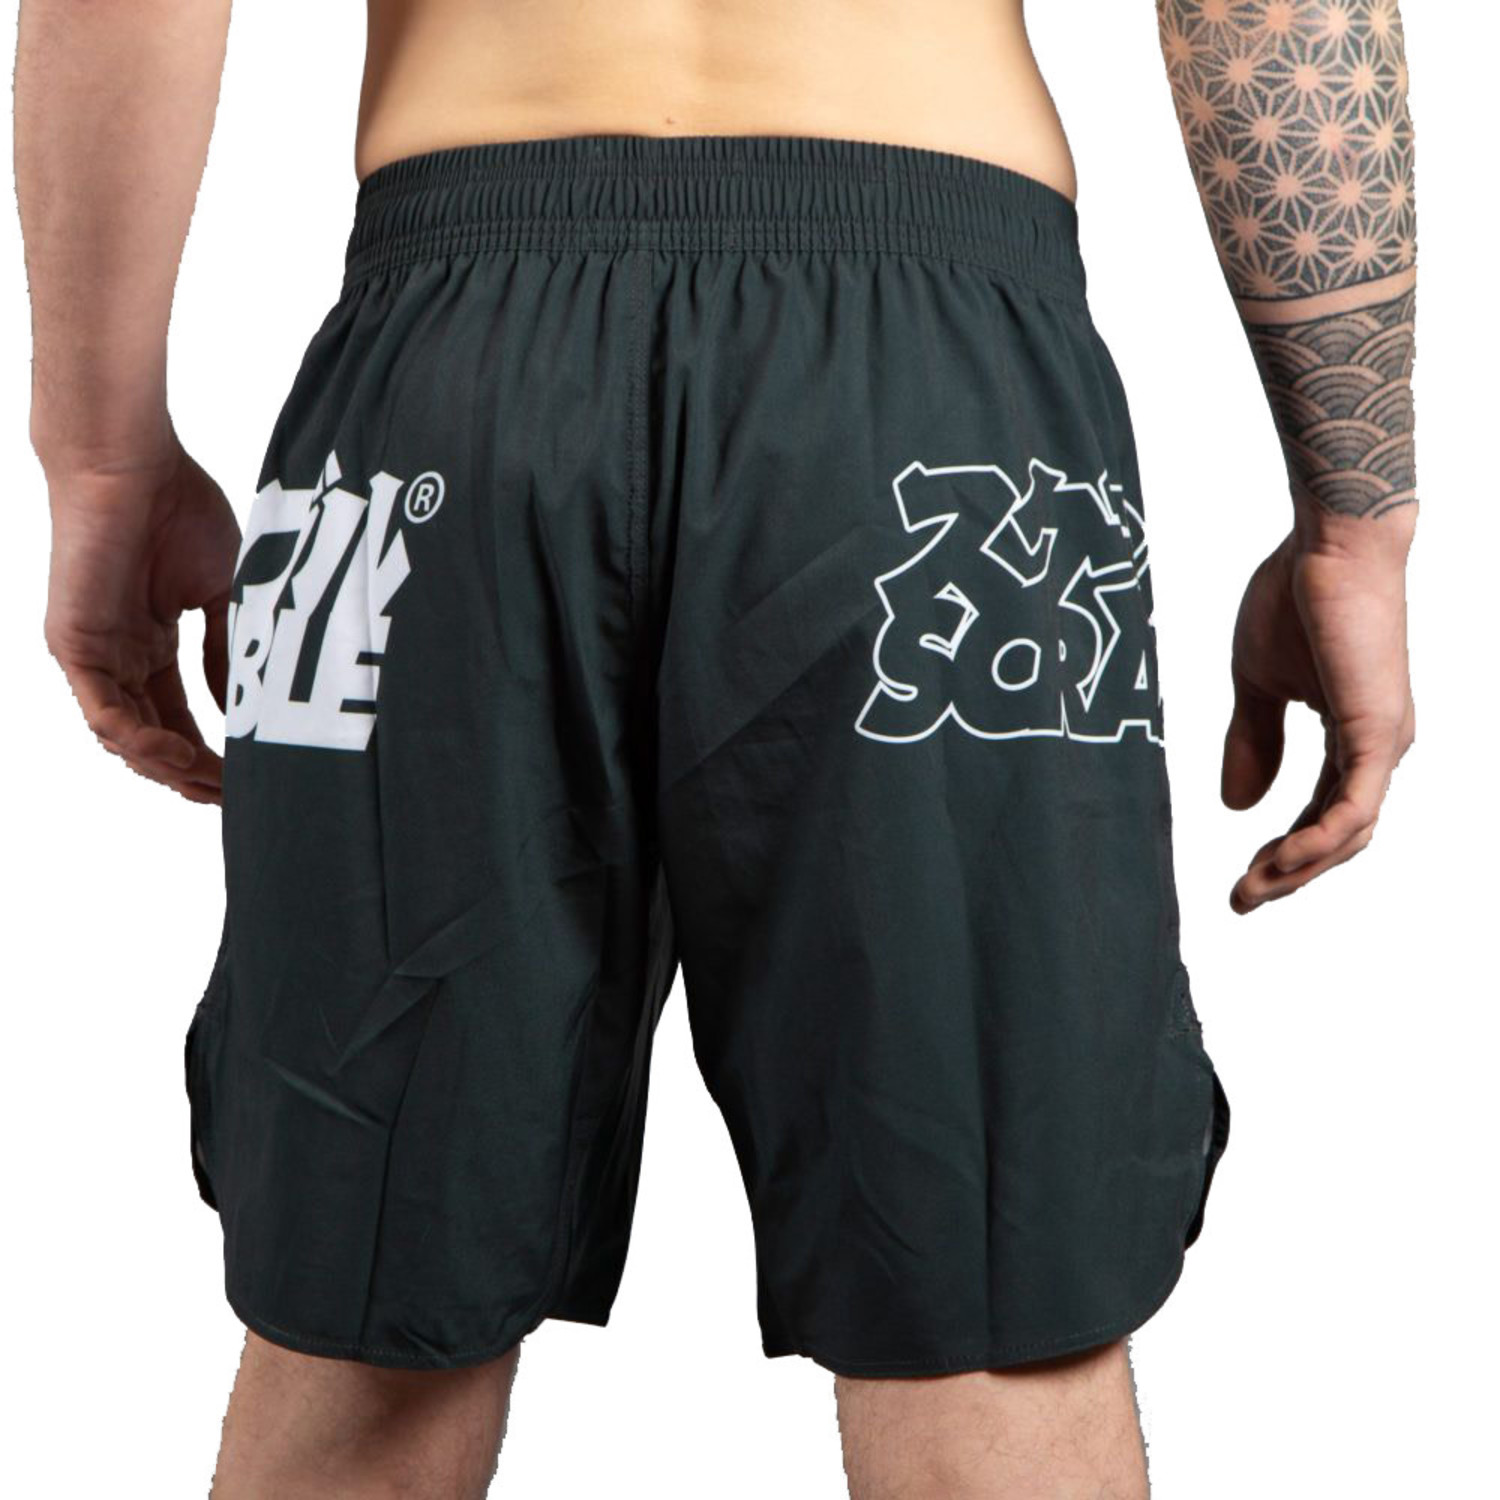 Scramble Black MMA Shorts for MMA and BJJ Nogi training - Enso Martial ...